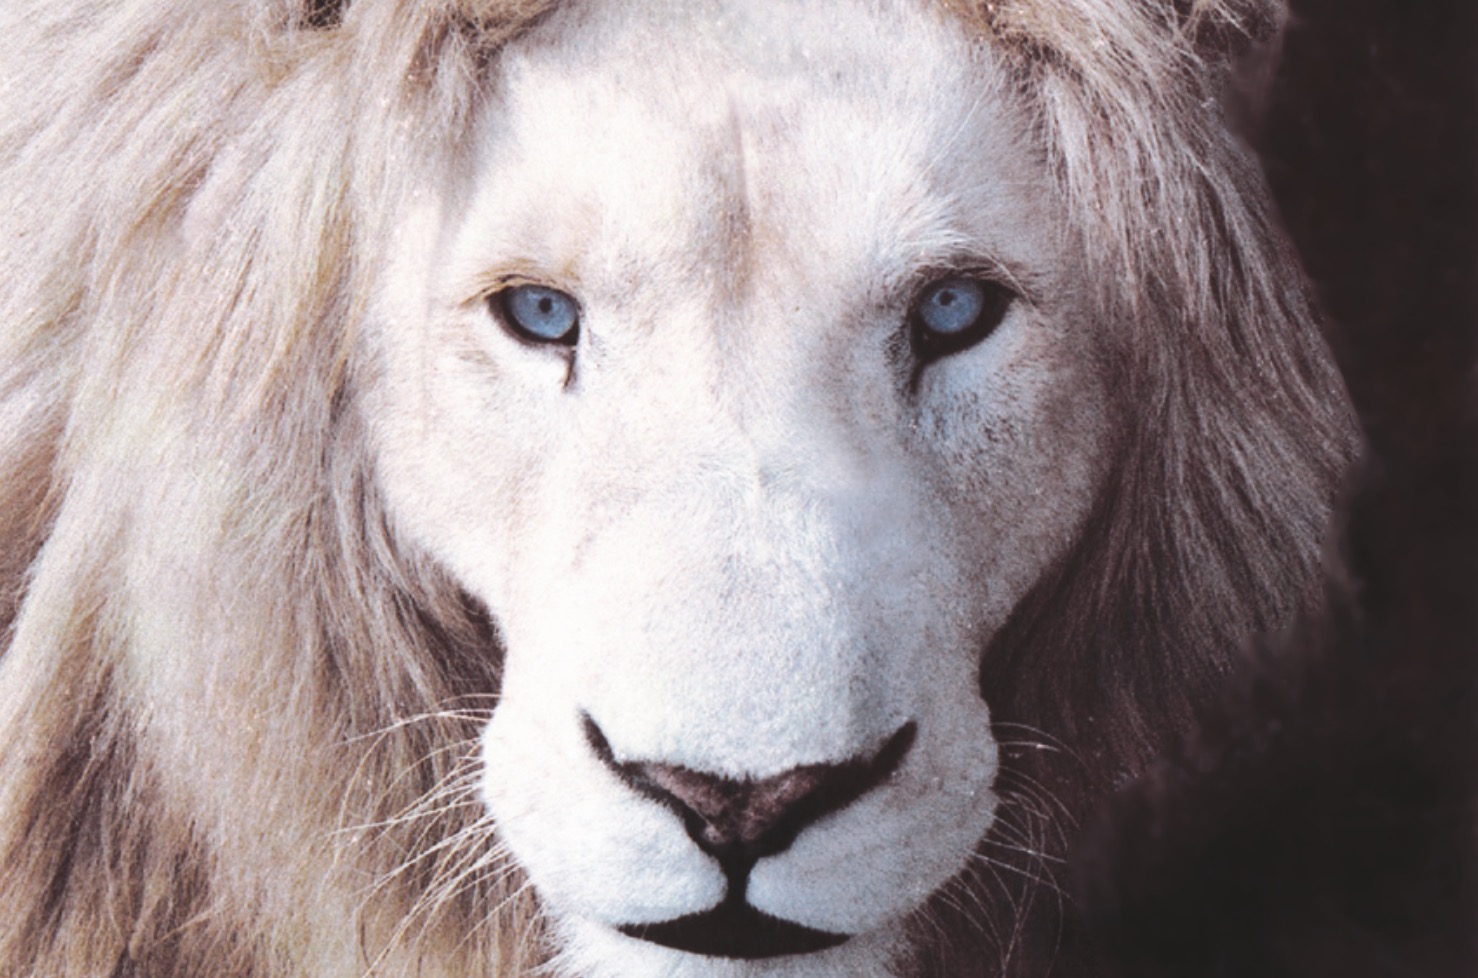 Global White Lion Trust